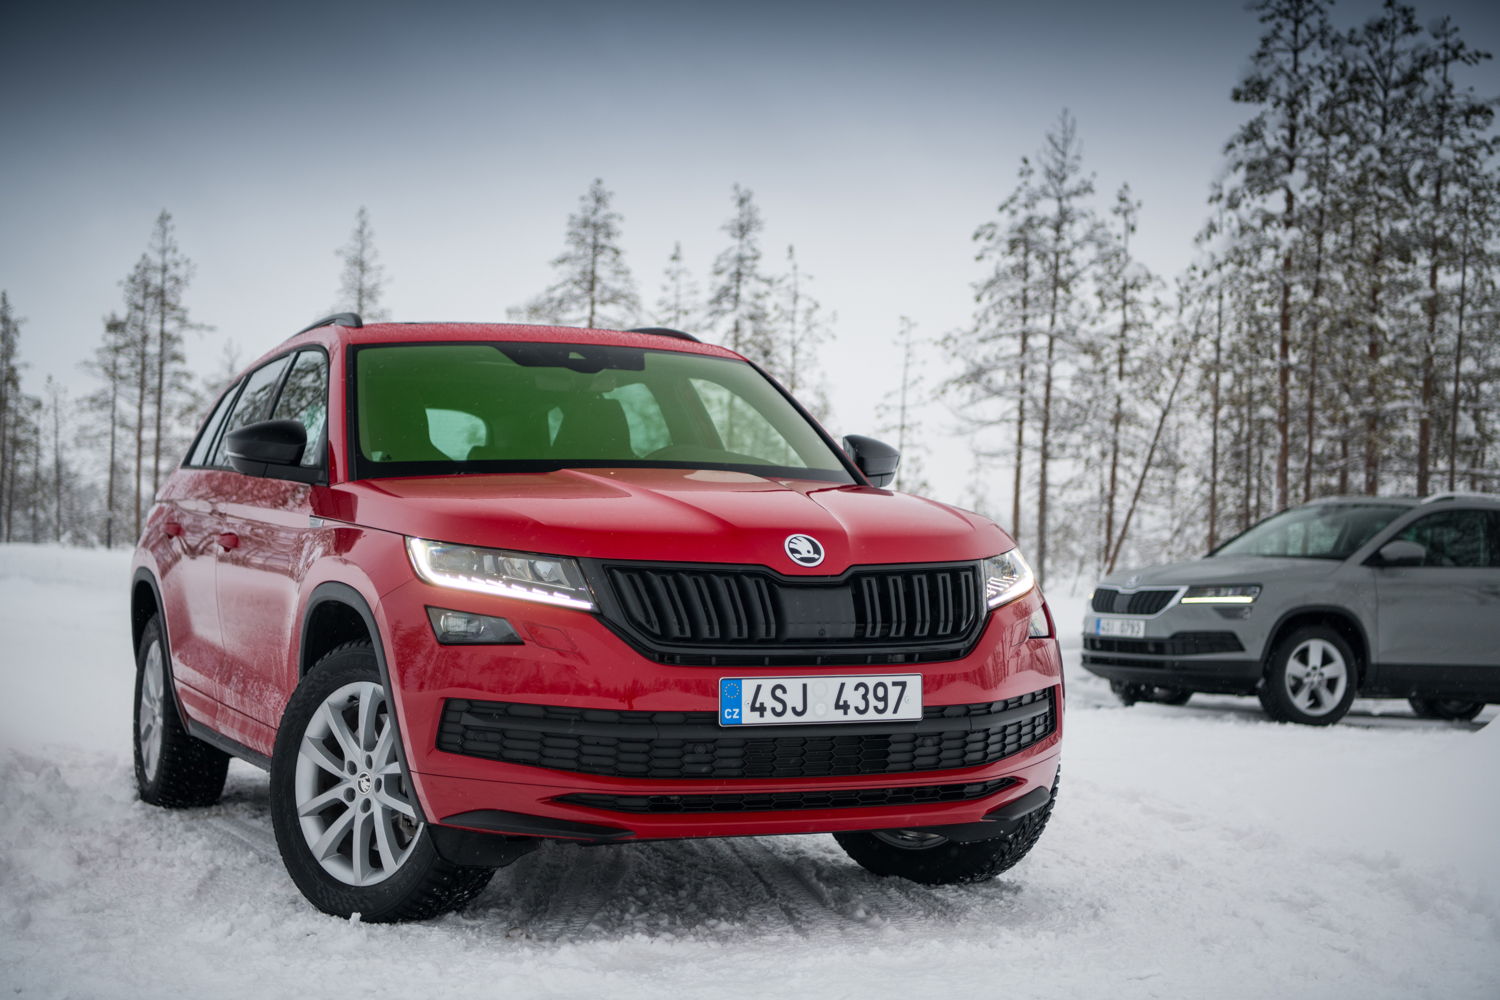 ŠKODA set a new sales record in 2019. The popular SUV models KAROQ and KODIAQ (photo) were key growth drivers in 2018.